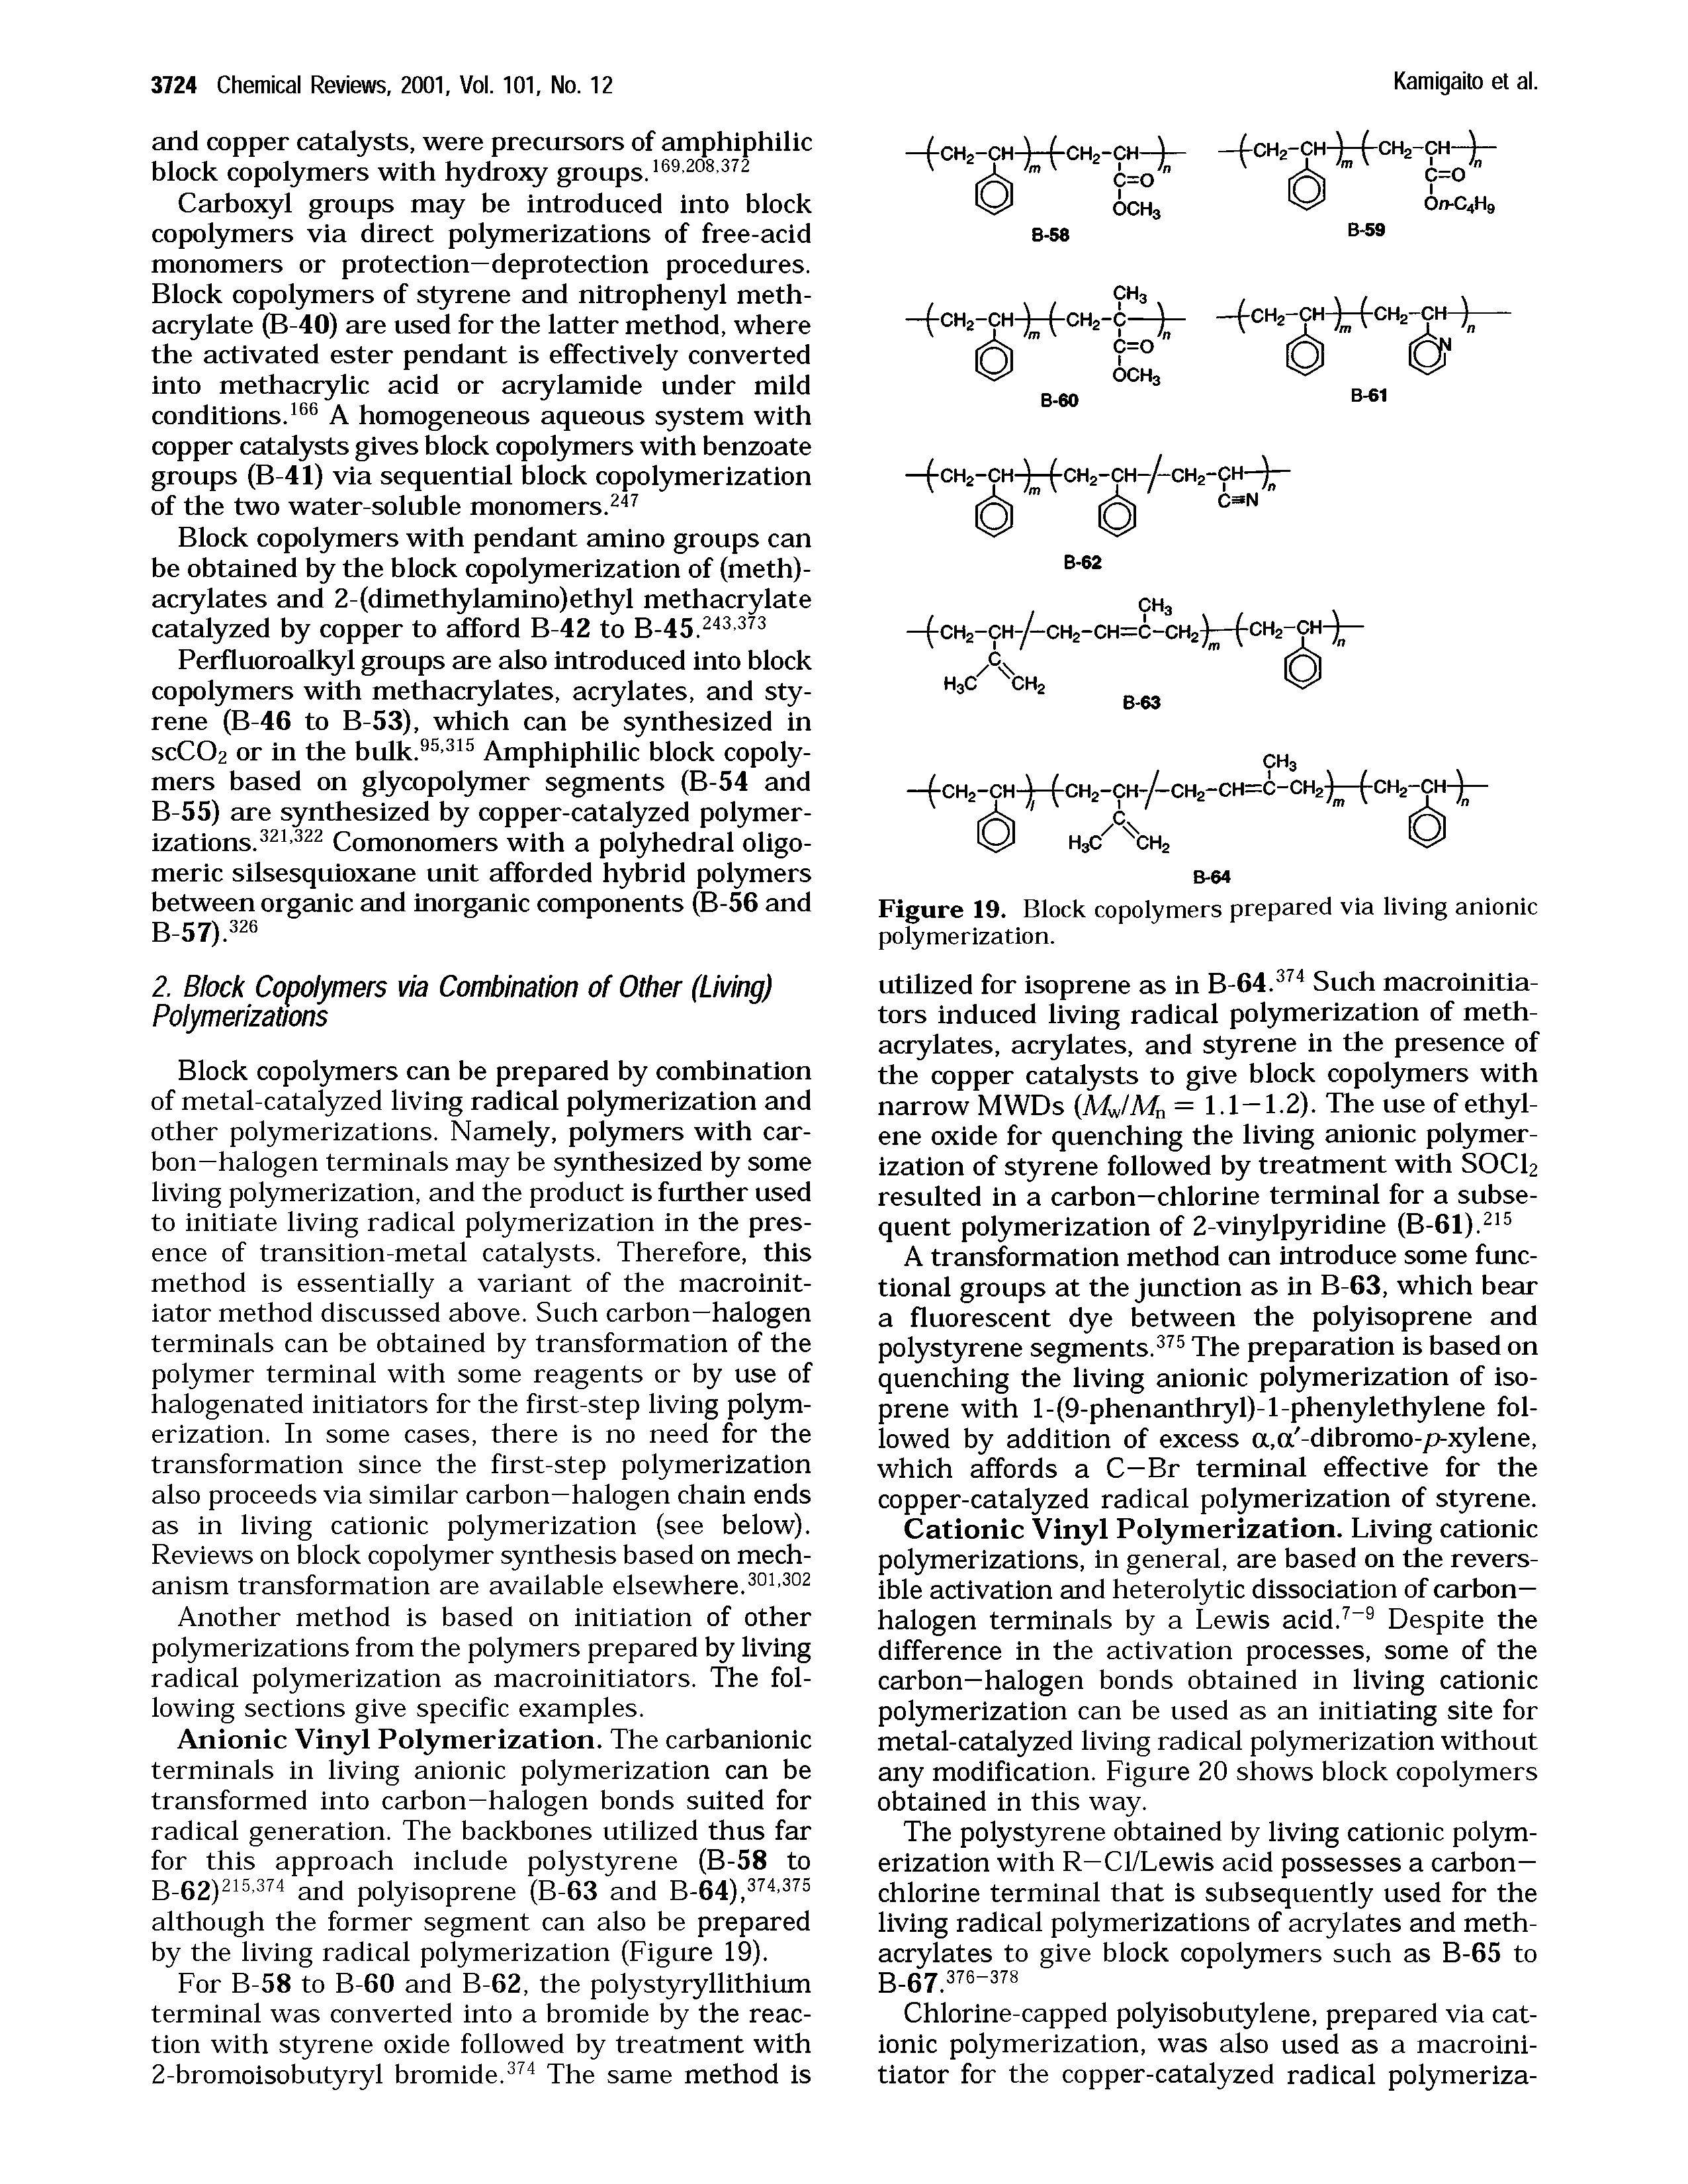 Figure 19. Block copolymers prepared via living anionic polymerization.